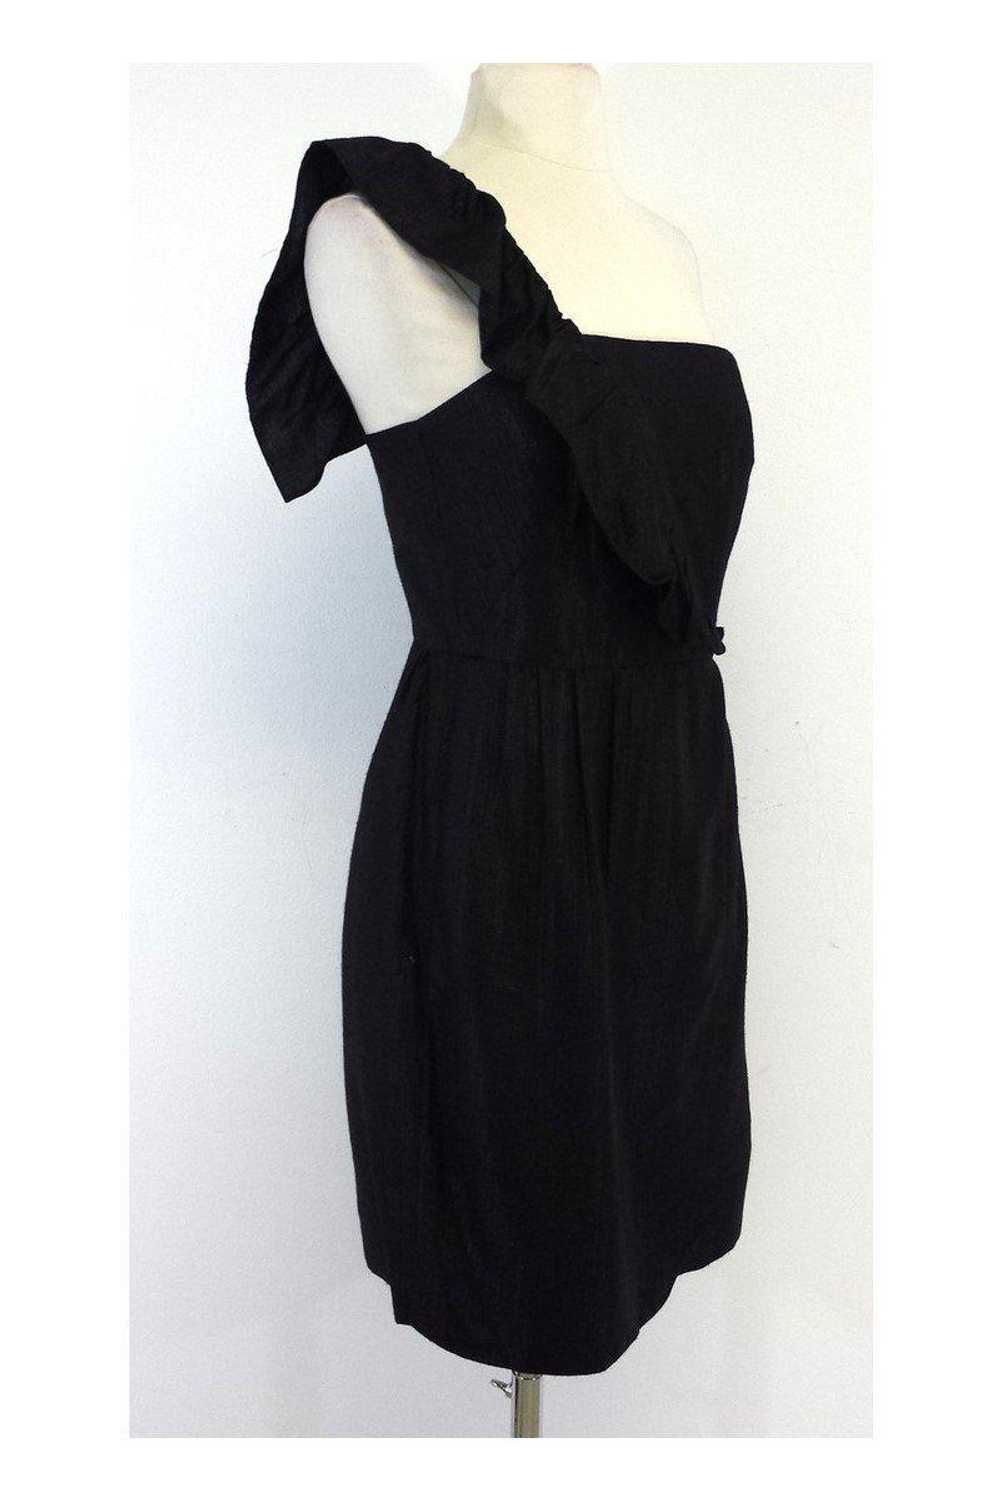 Milly - Metallic Black One Shoulder Dress Sz 2 - image 2